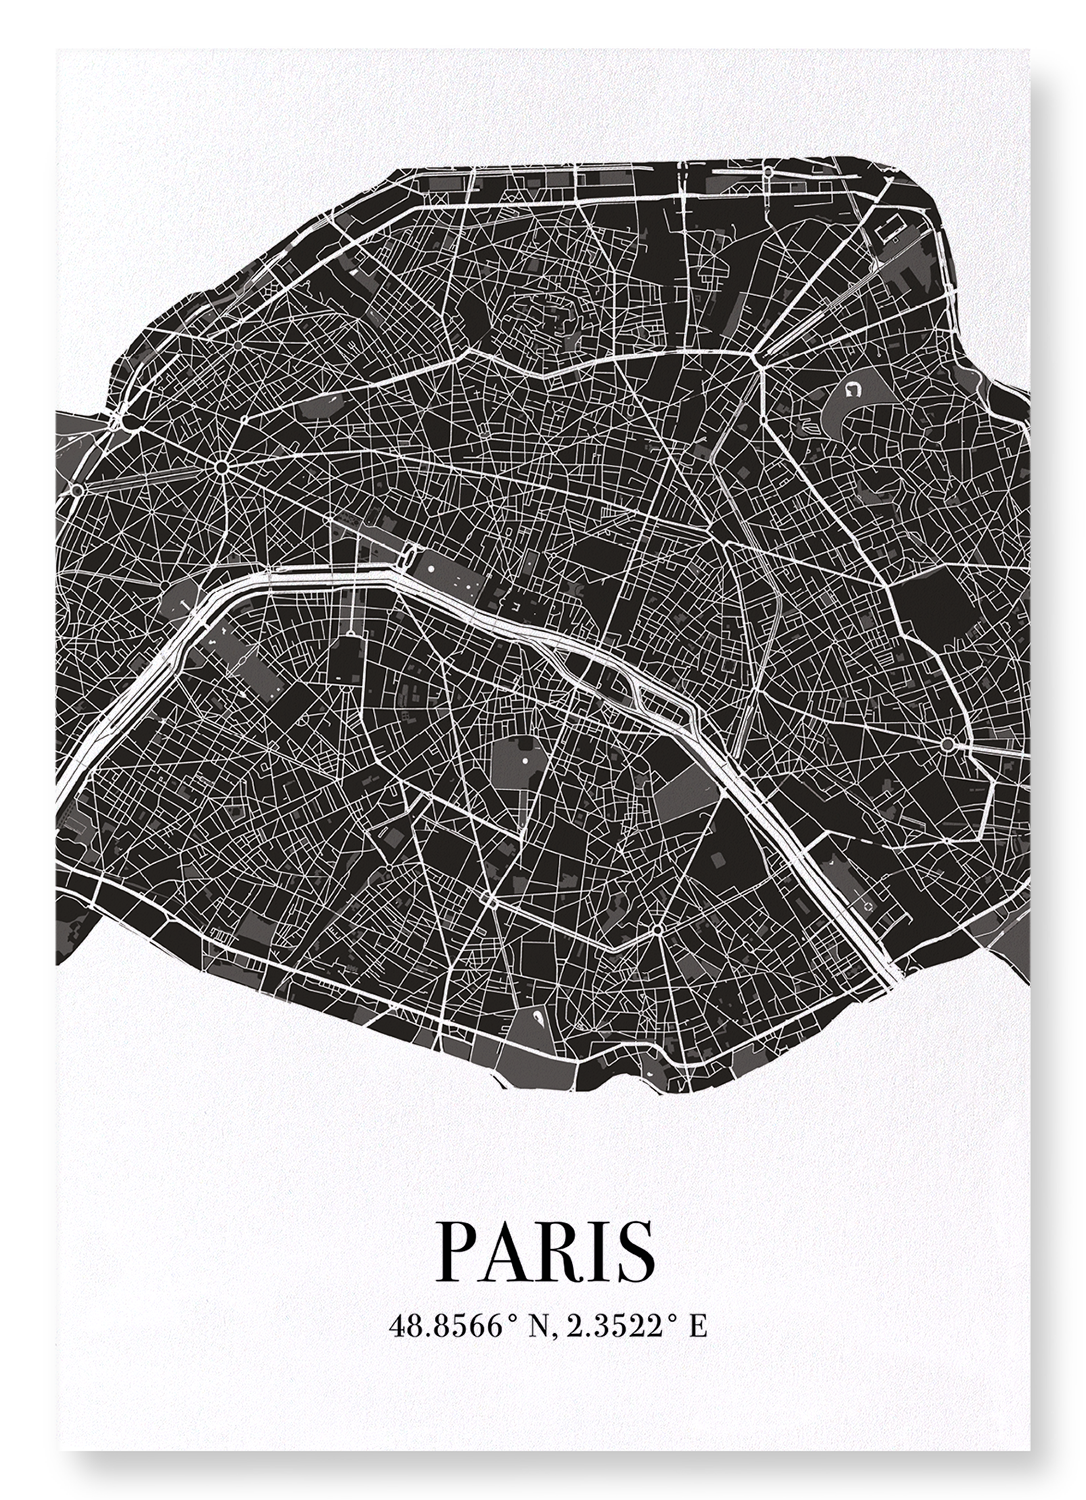 PARIS CUTOUT: Map Cutout Art Print